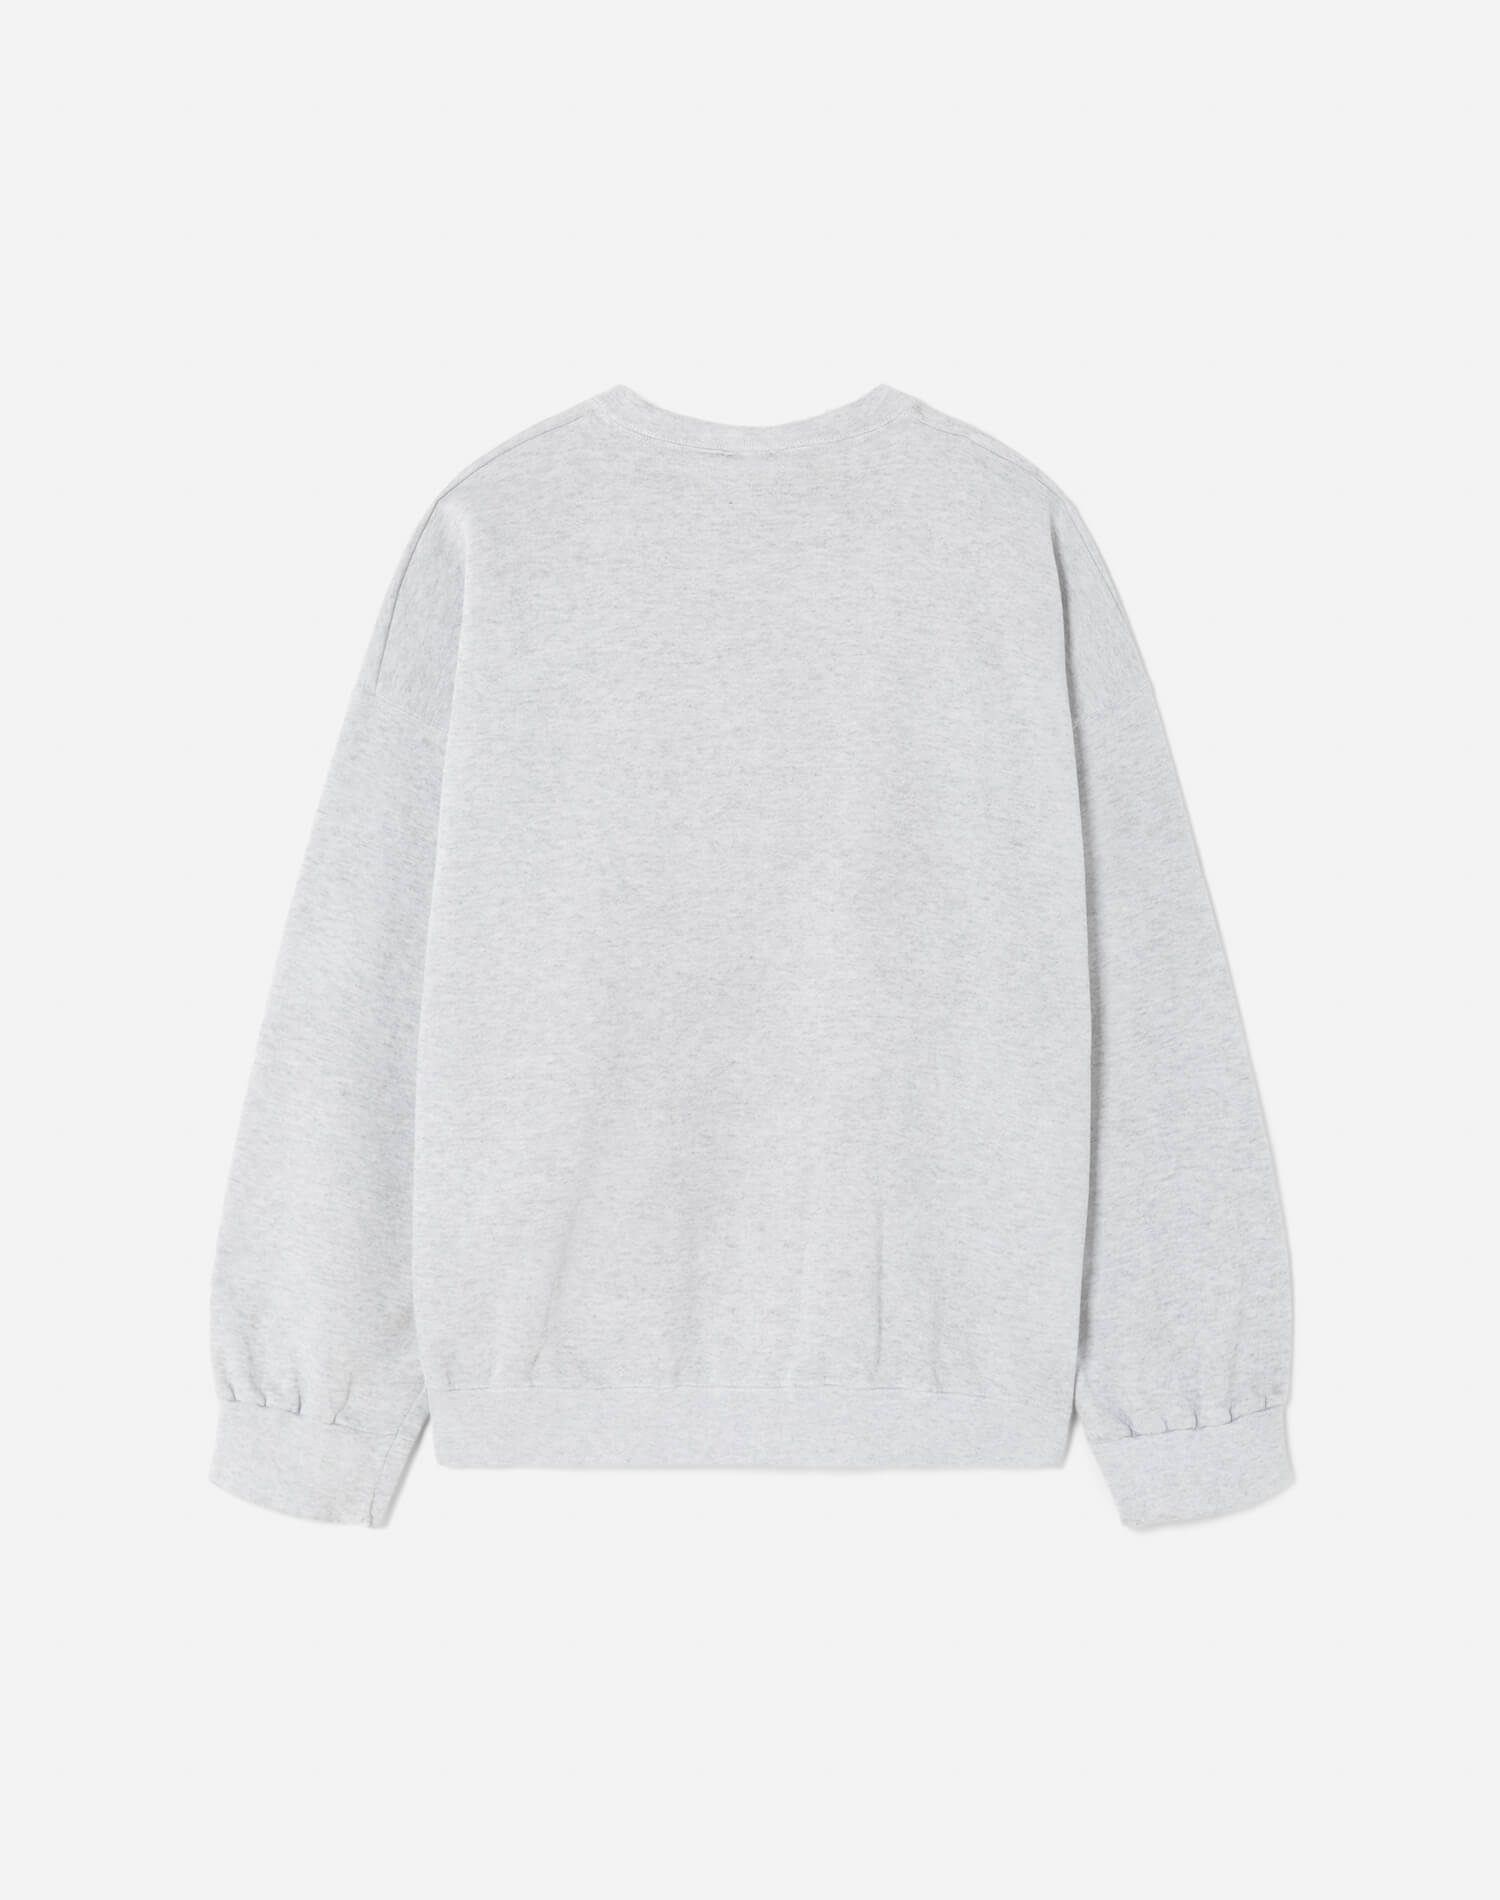 Upcycled "Aspen" Sweatshirt - Grey